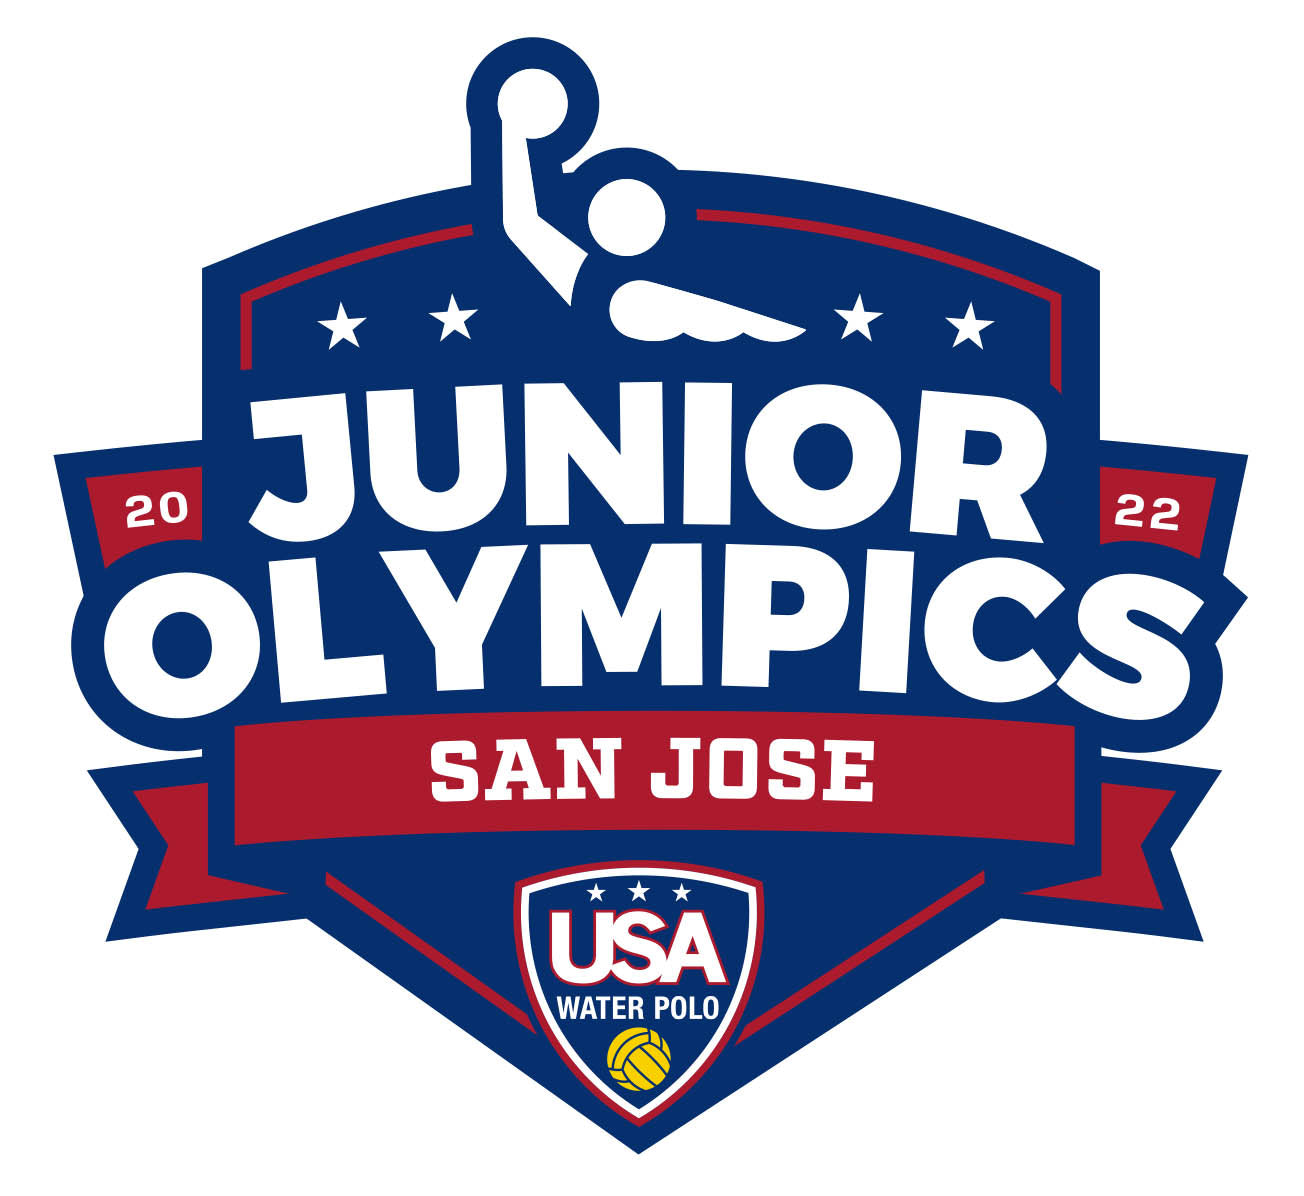 USAWP JUNIOR OLYMPICS 2022